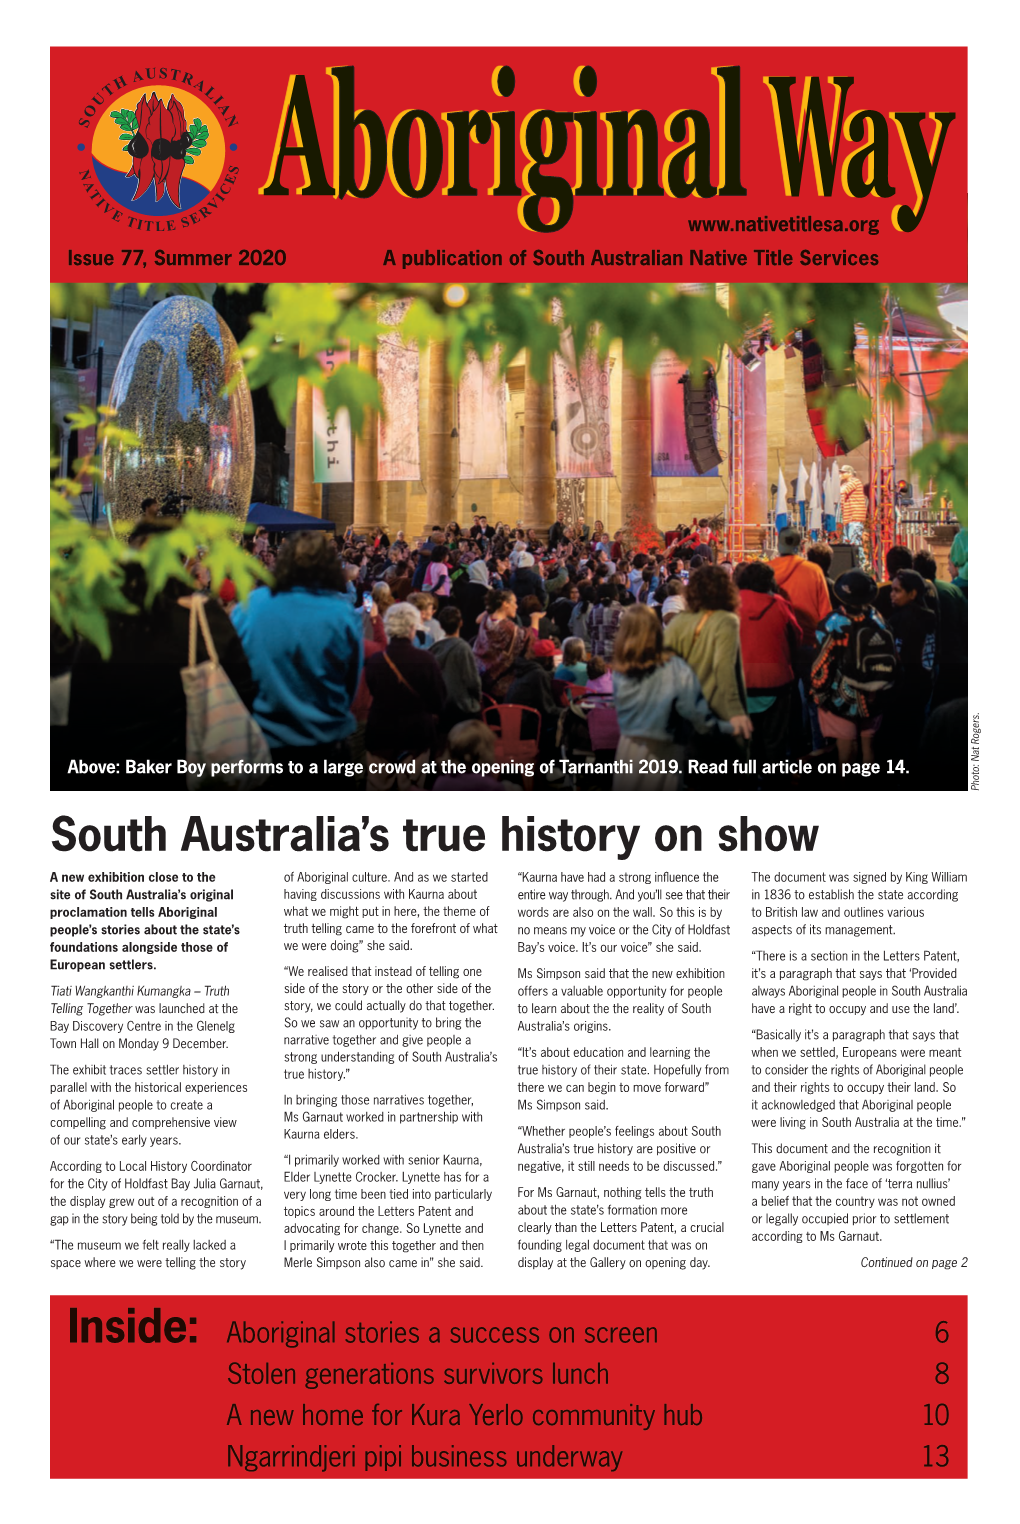 South Australia's True History on Show